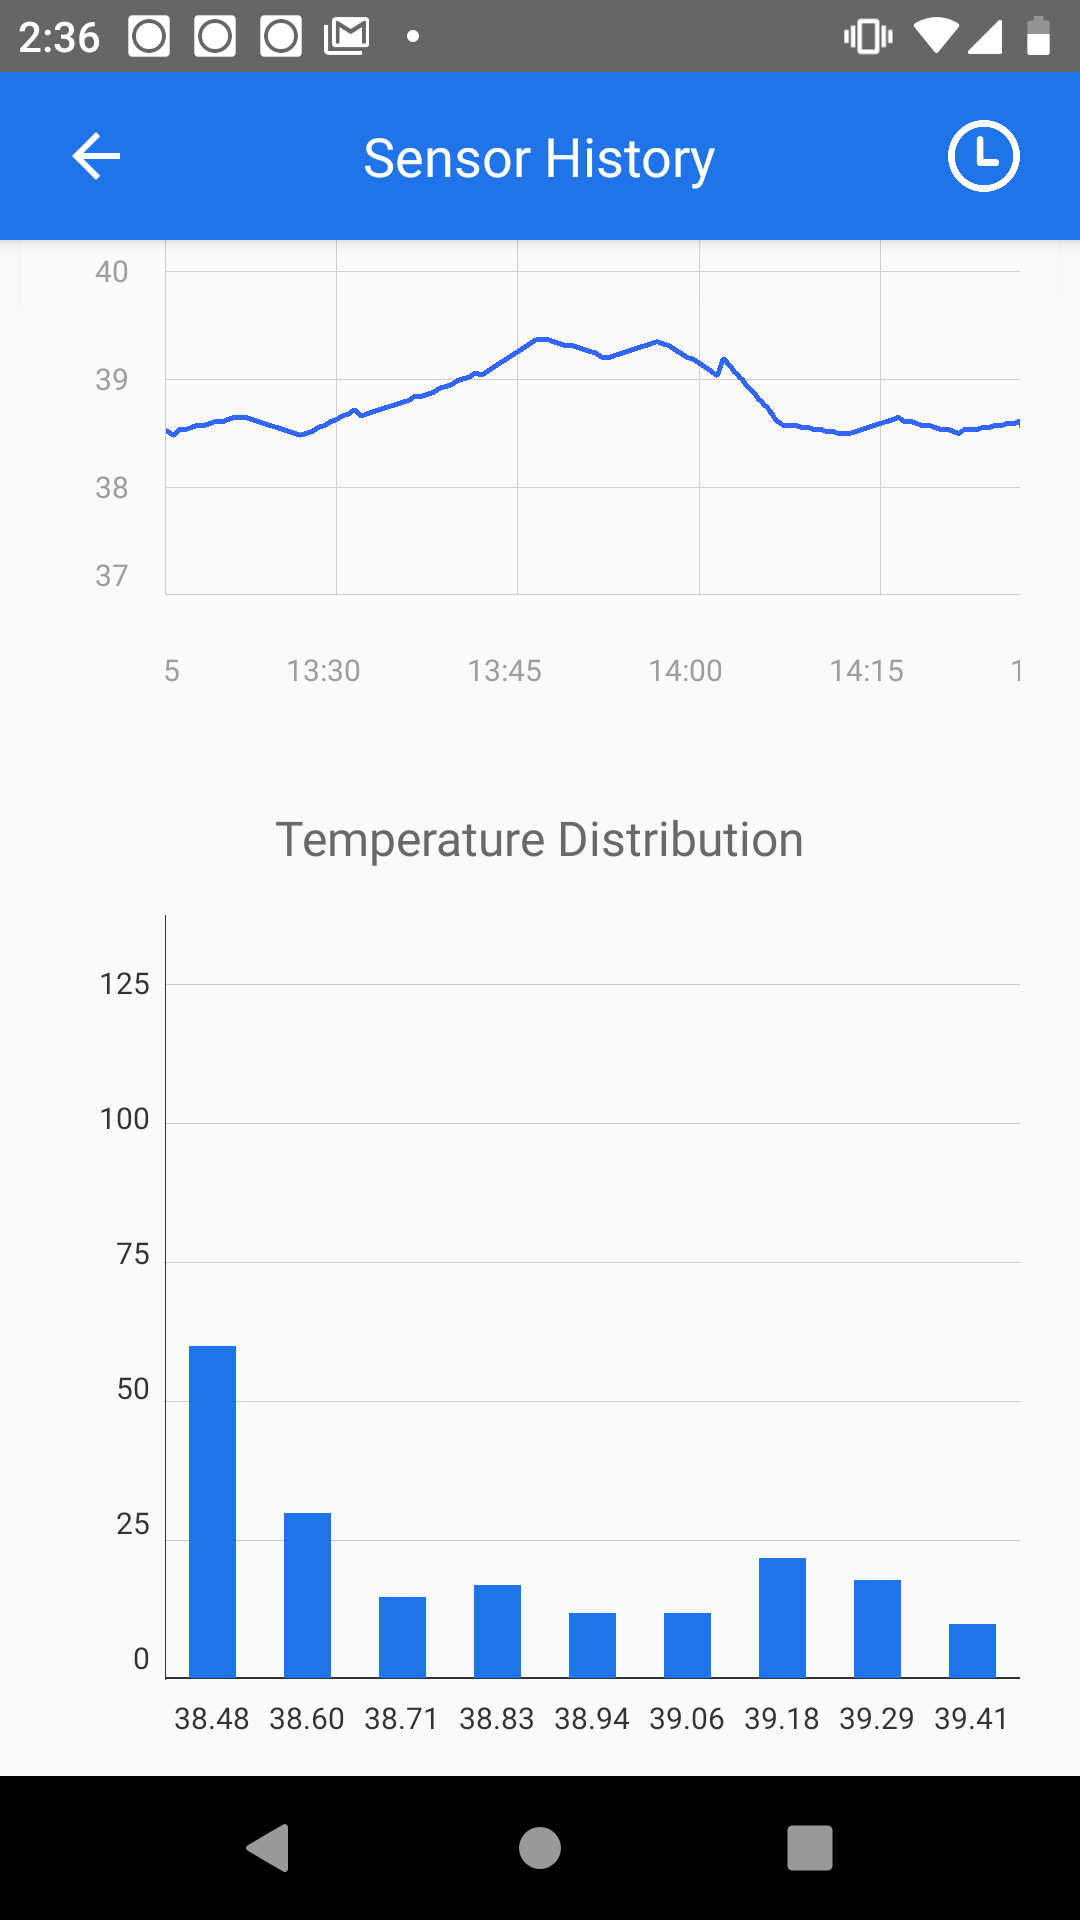 https://www.homebrewfinds.com/wp-content/uploads/2021/02/Temperature-Histogram-Screenshot-from-App.png